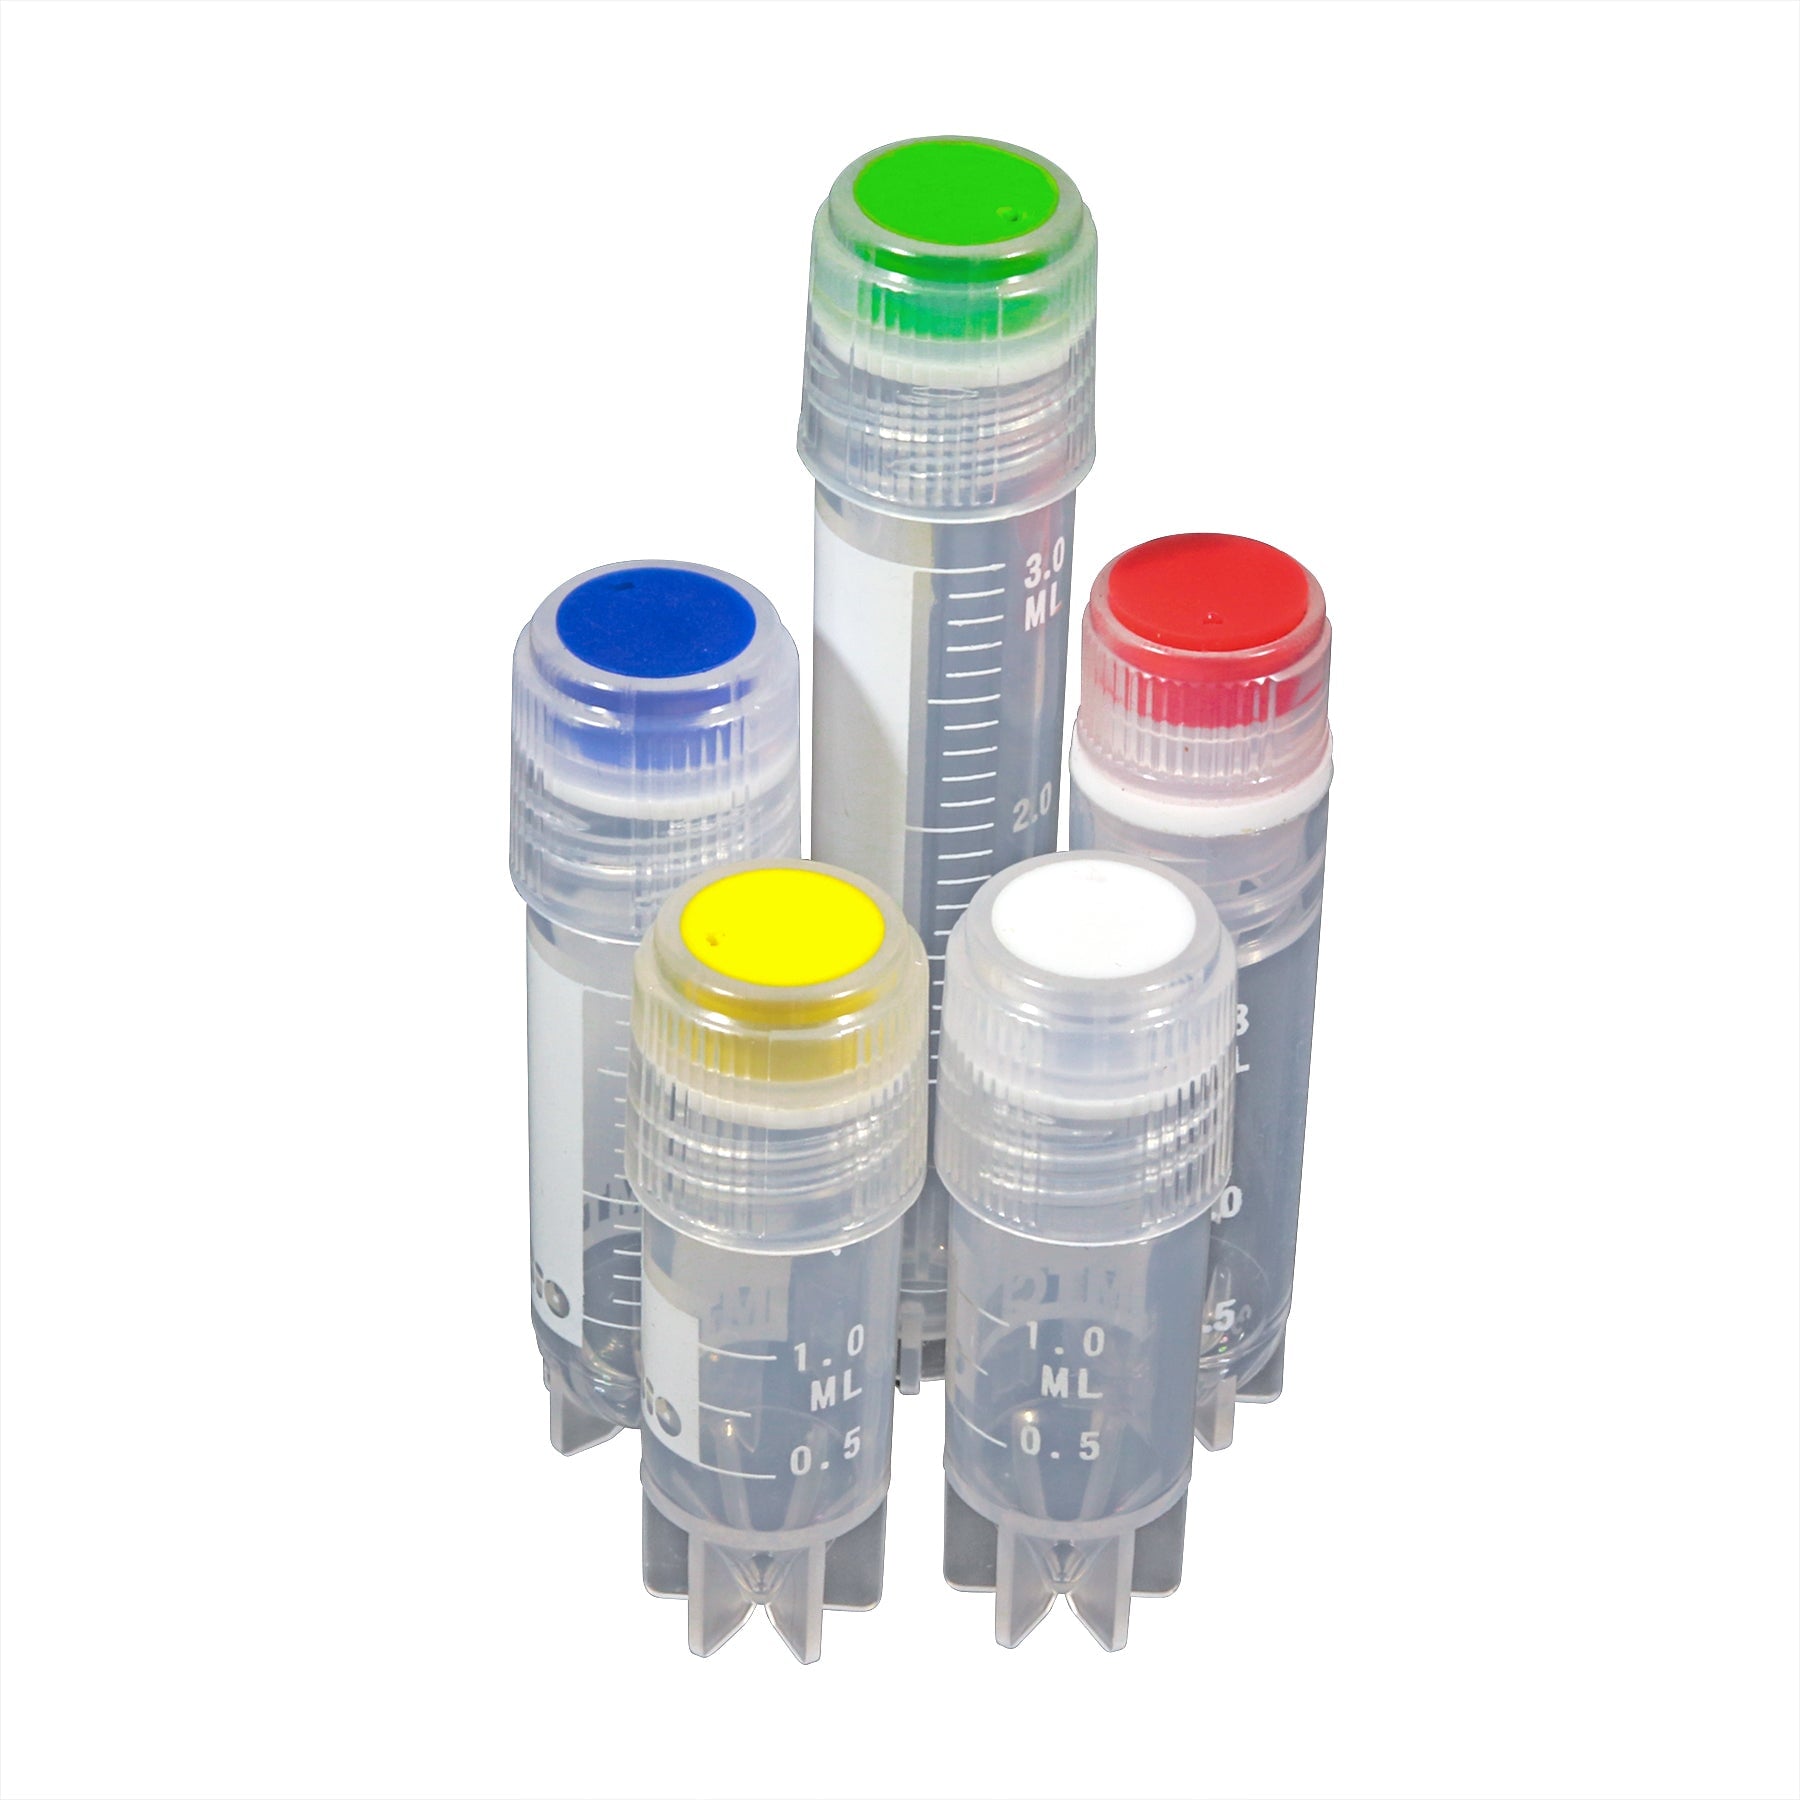 MTC Bio V5809-B Cap inserts for cryogenic vials, blue, 500/pk